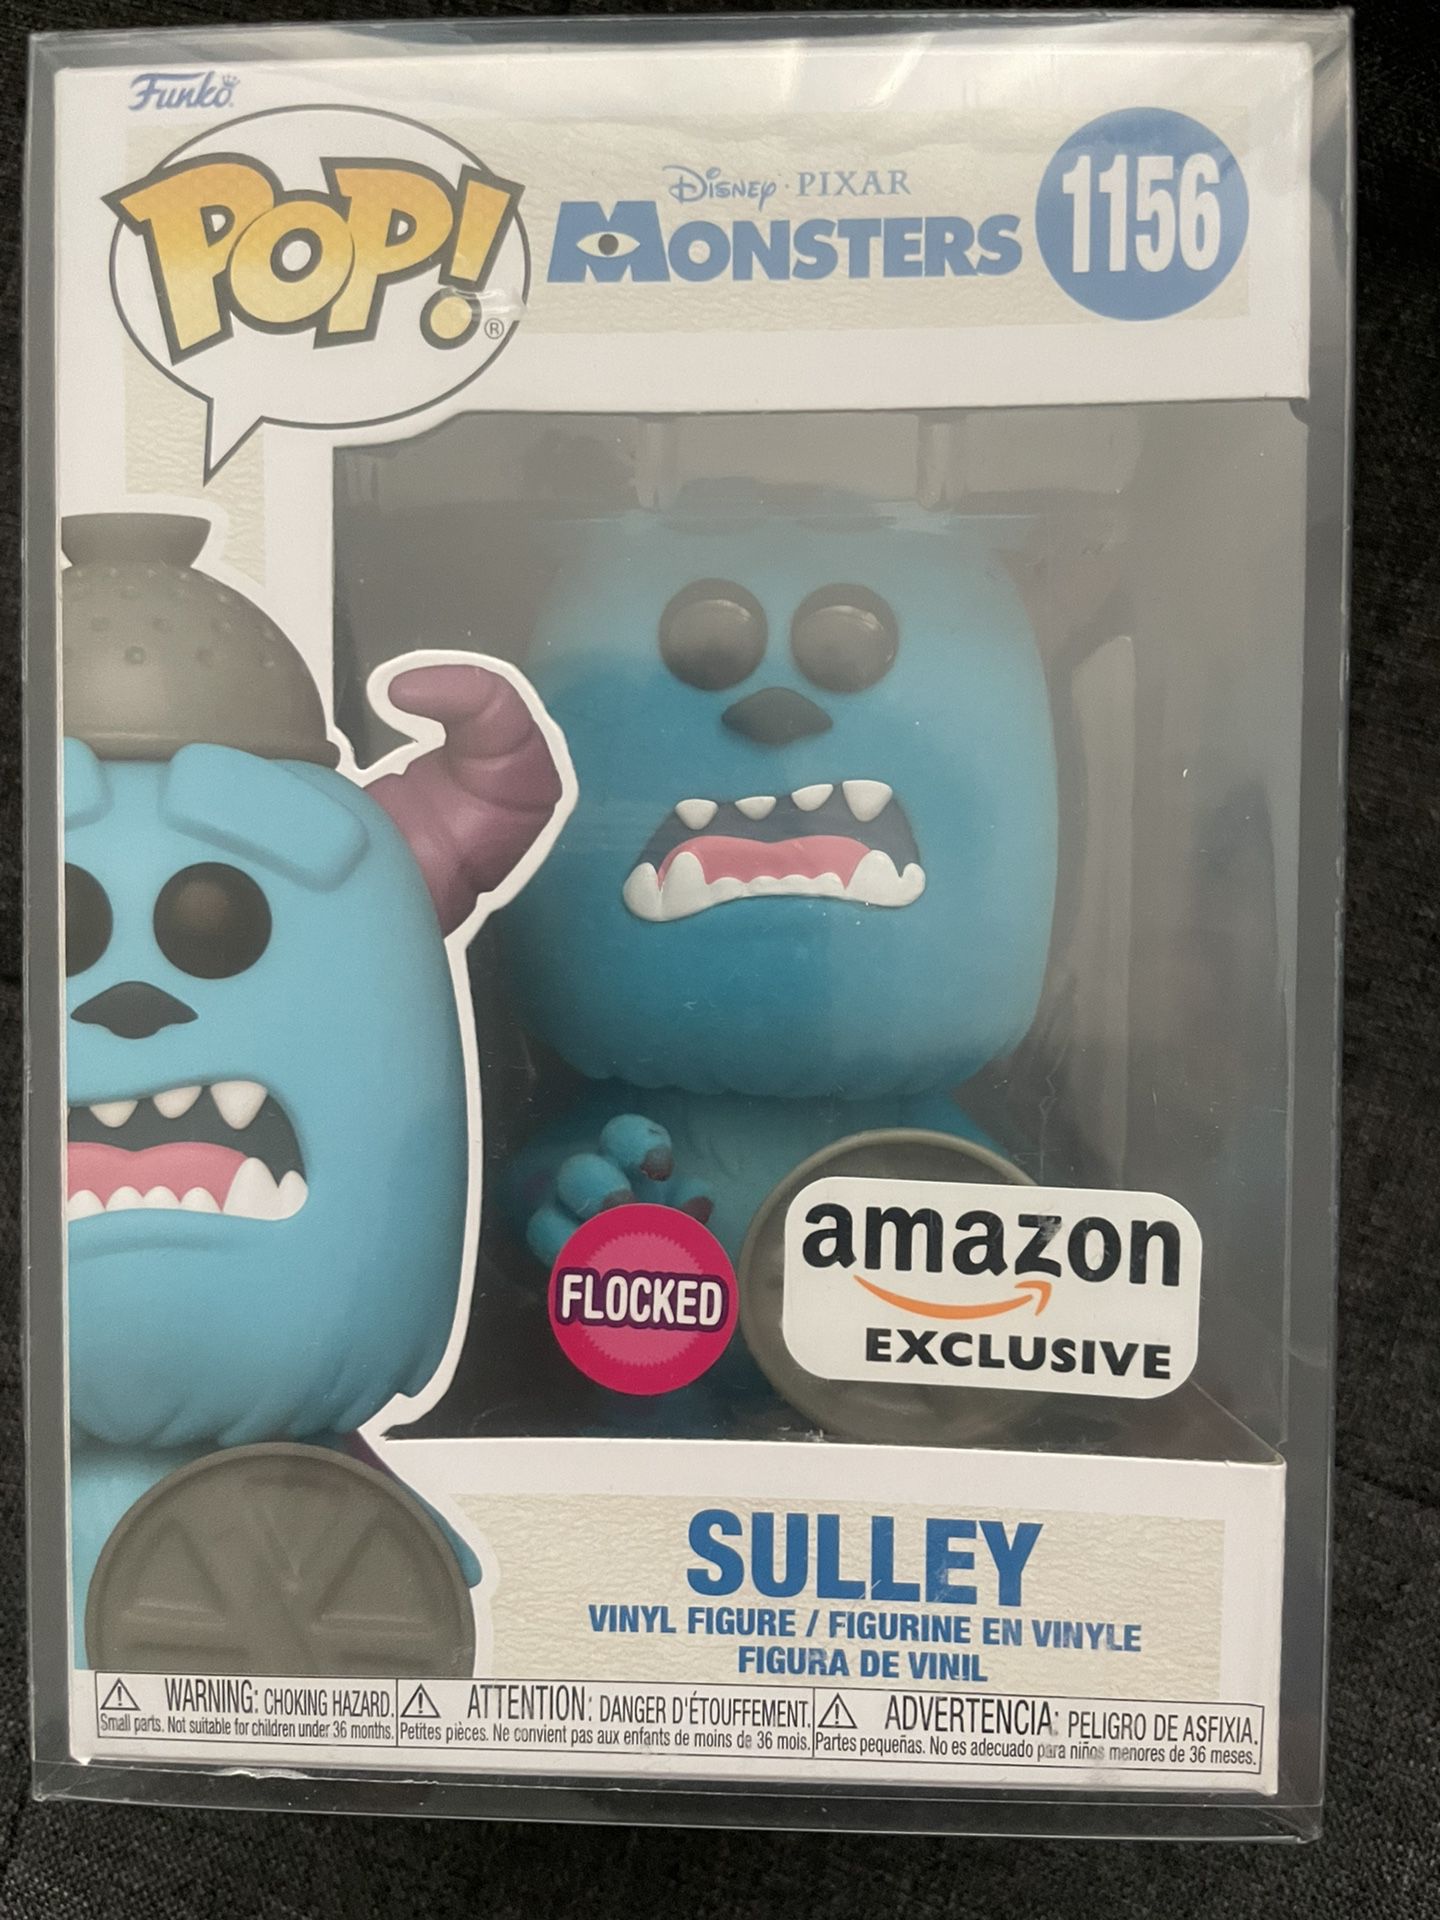 Flocked Sulley Amazon Exclusive Funko Pop Monsters Inc Pixar 